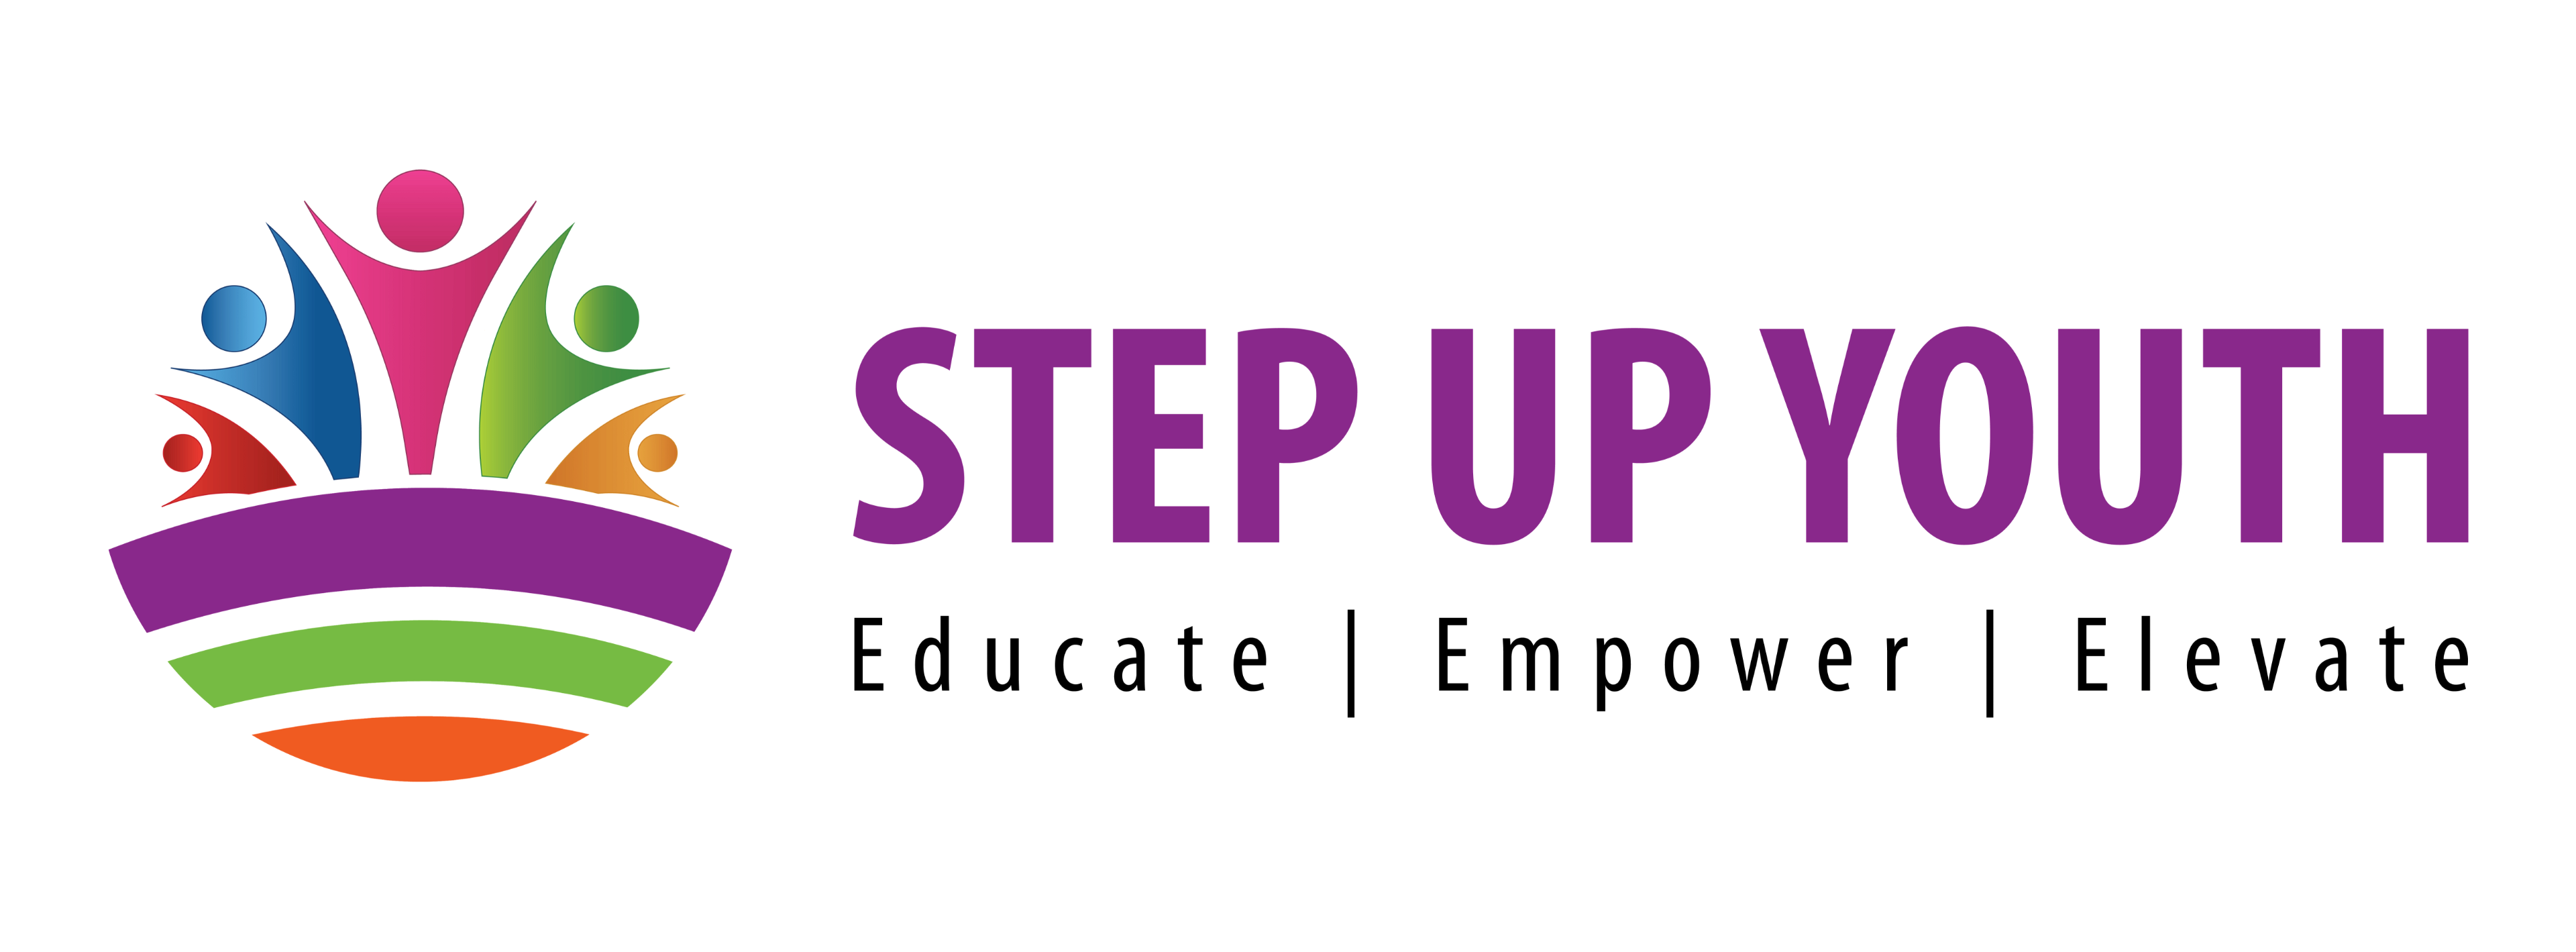 Step Up Youth logo